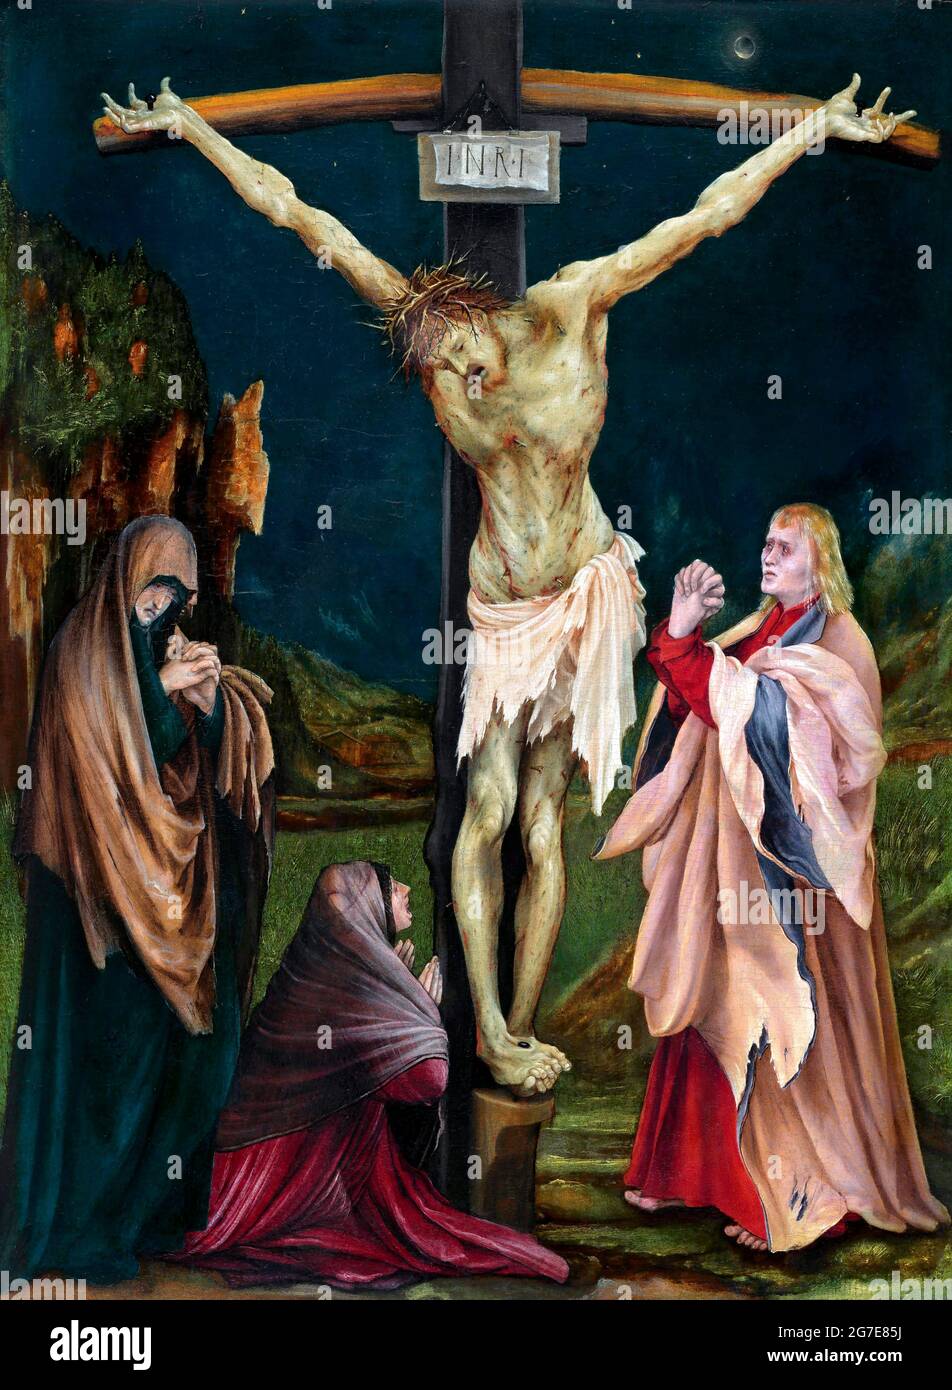 The Small Crucifixion by Matthias Grünewald (c. 1470-1528), oil on panel, c. 1511-1520 Stock Photo